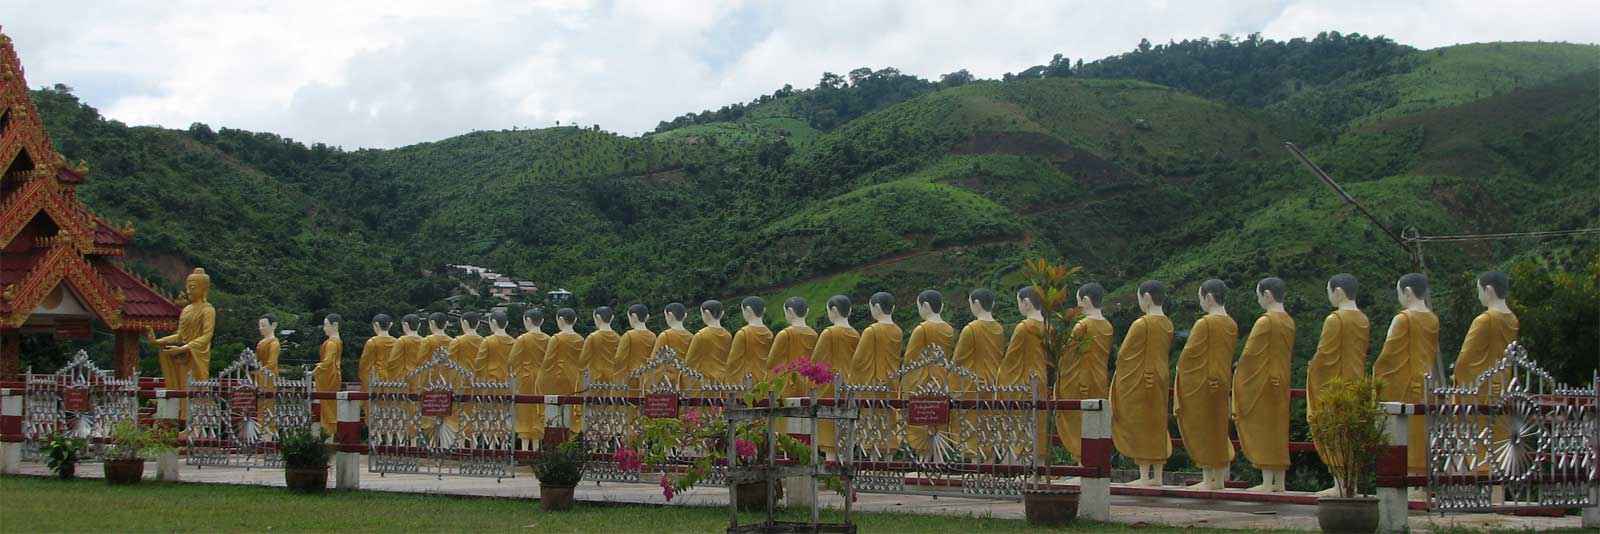 A row of tall gold Buddhist statues are on display at the beautiful Shwe Dagon Pagoda temple in Tachilek, Burma (Myanmar)